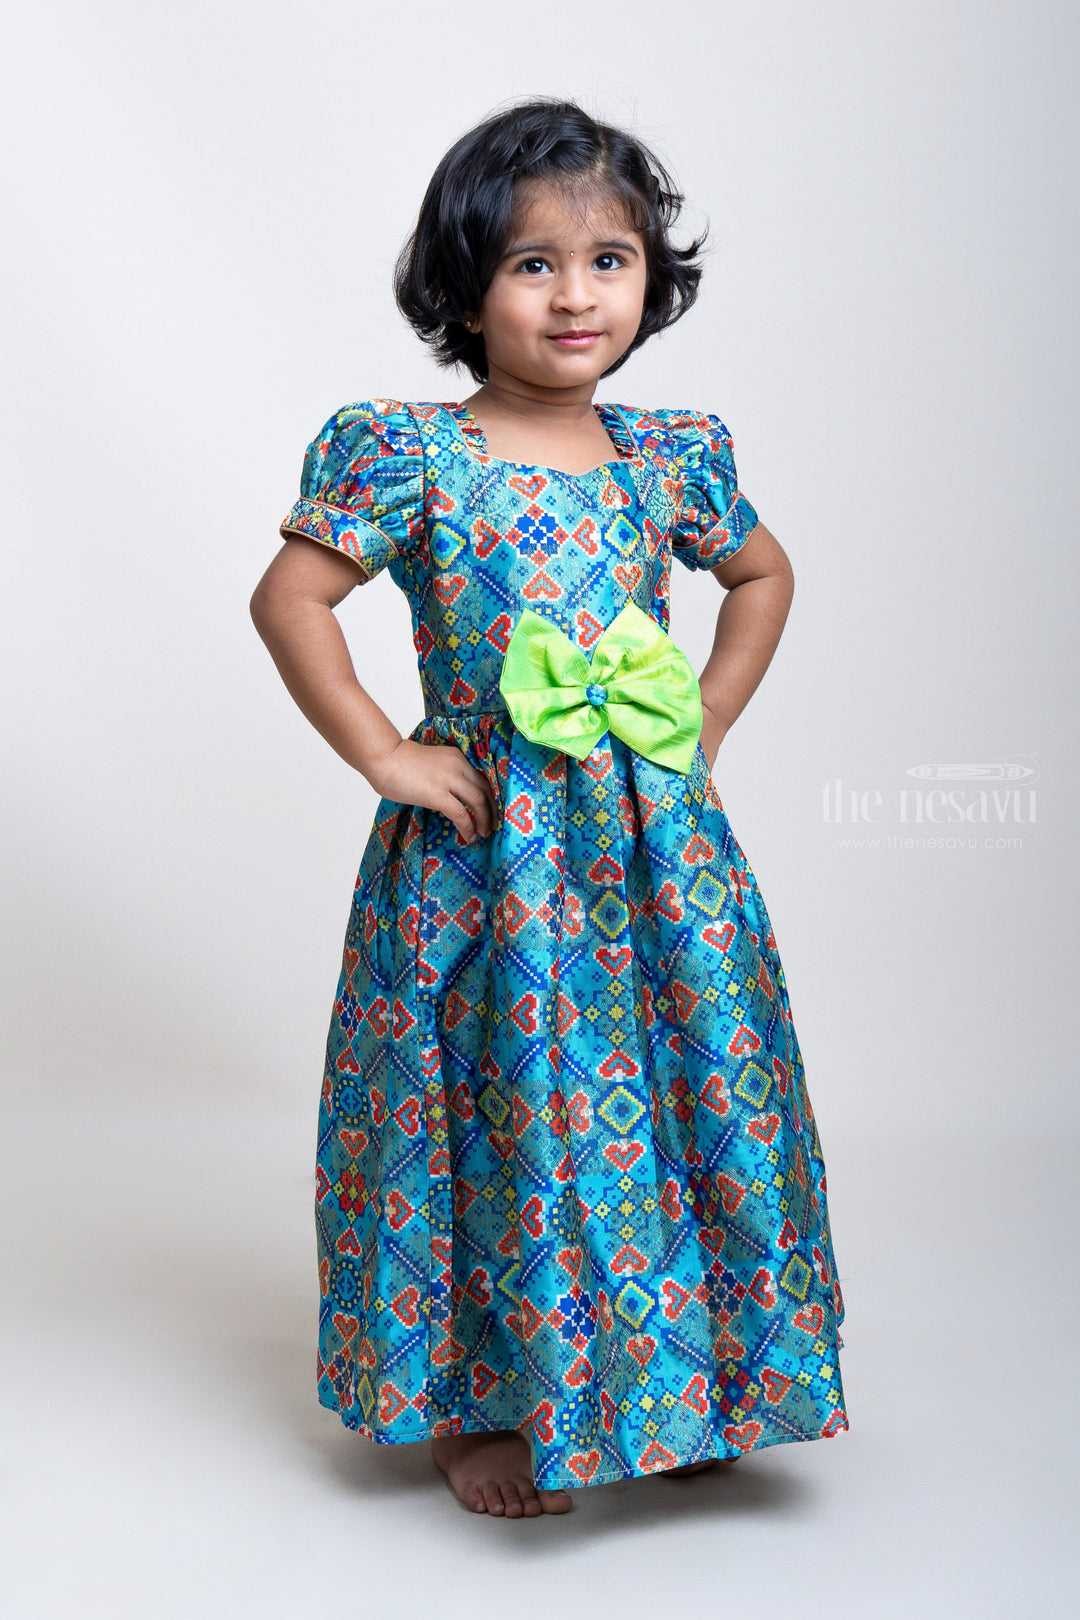 The Nesavu Silk Gown Patola Printed Blue Anarkali With Bow Embellishment For Girls Nesavu Silk Cotton Anarkali For Baby Girls | Ethnic Wear Dresses | The Nesavu